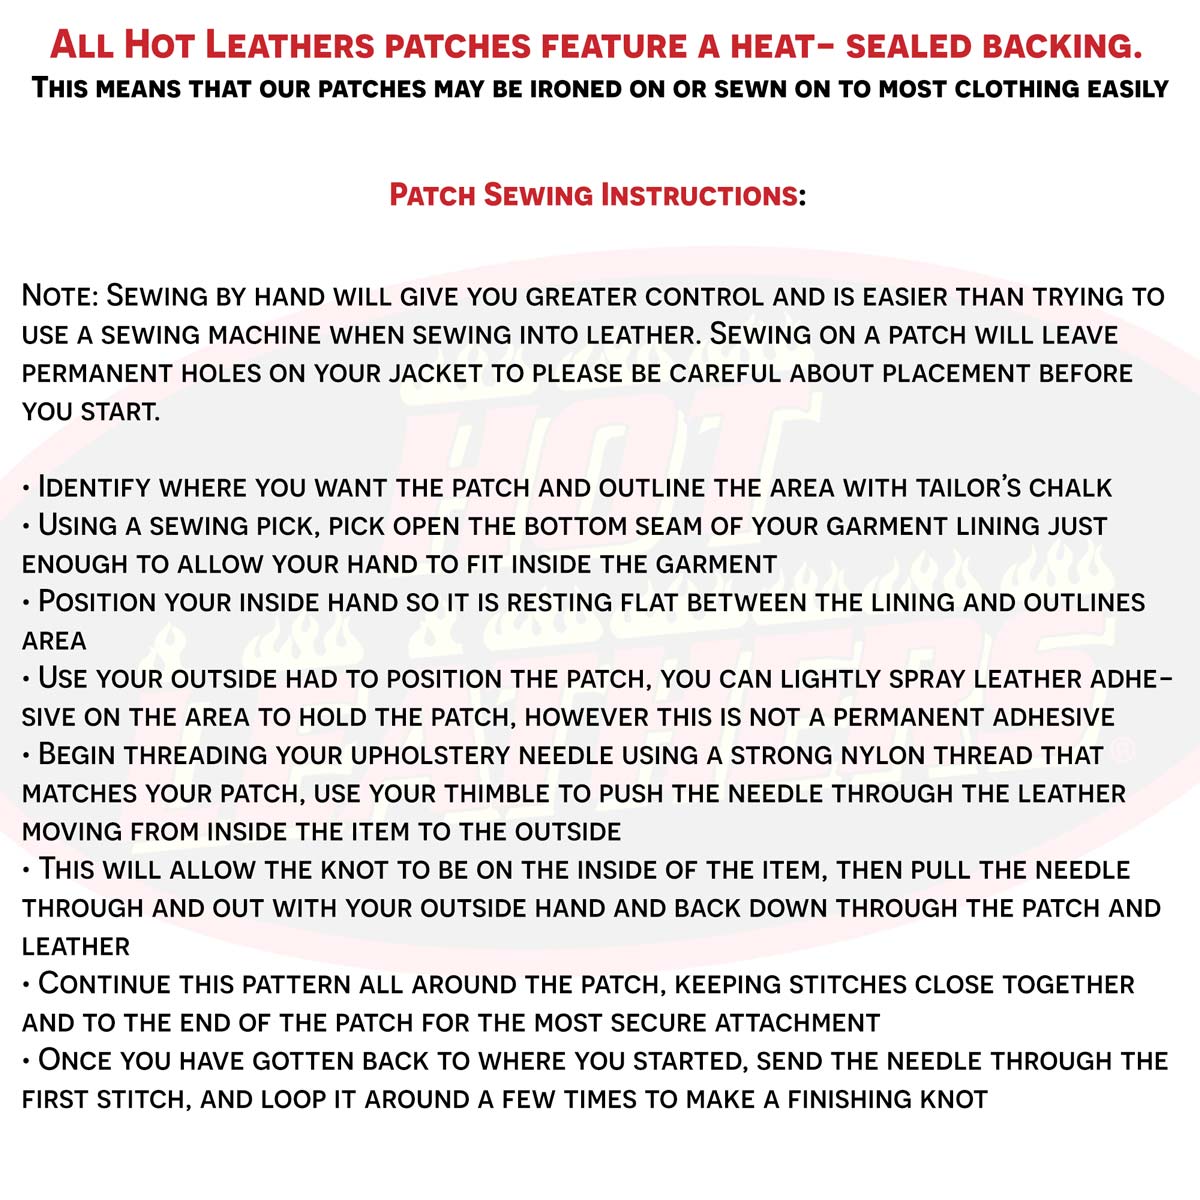 Hot Leathers Work Sucks - Let's Ride 12" X 3" Top Rocker Patch PPM4213